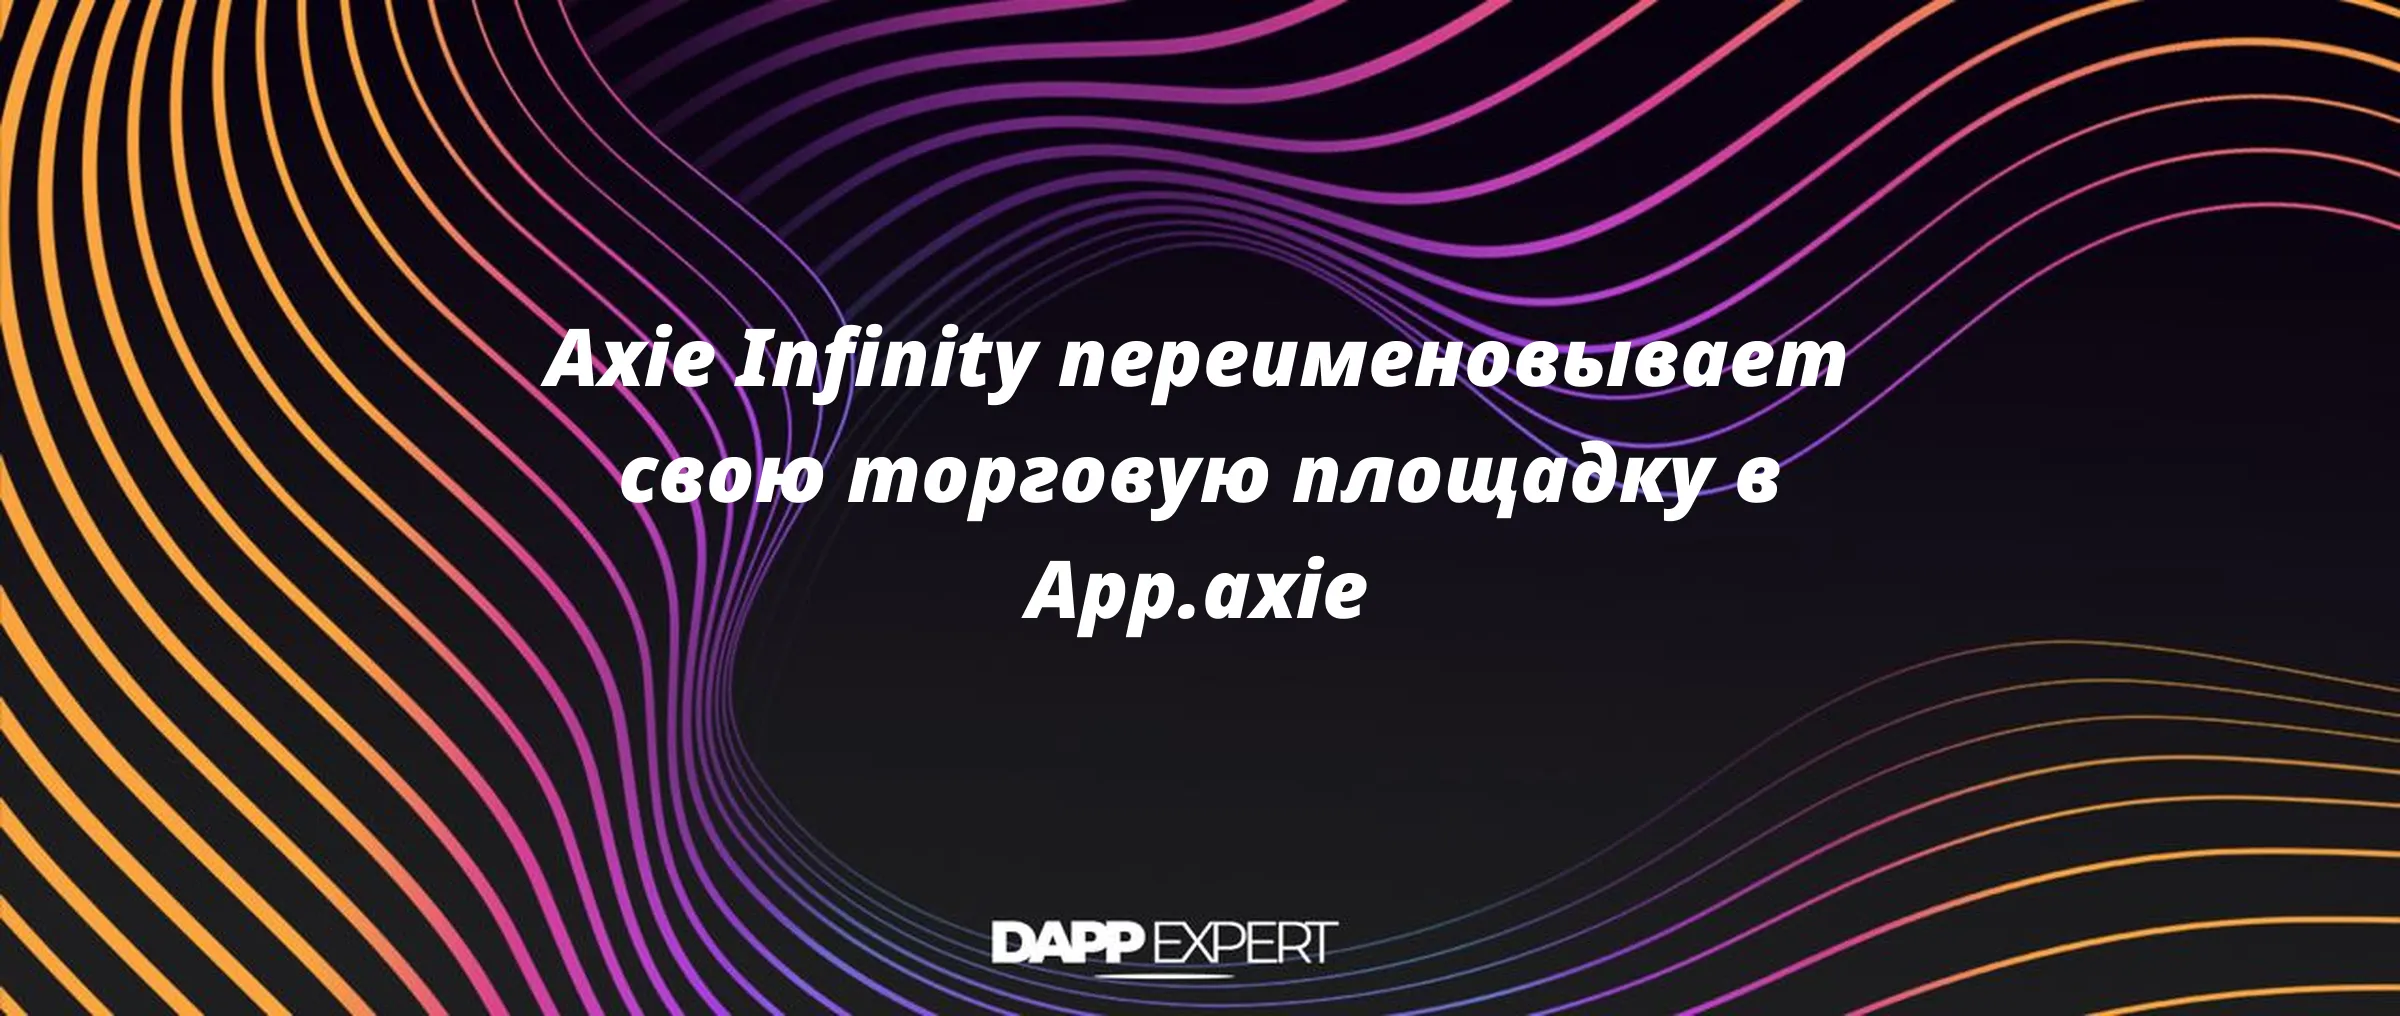 Axie Infinity переименовывает свою торговую площадку в App.axie